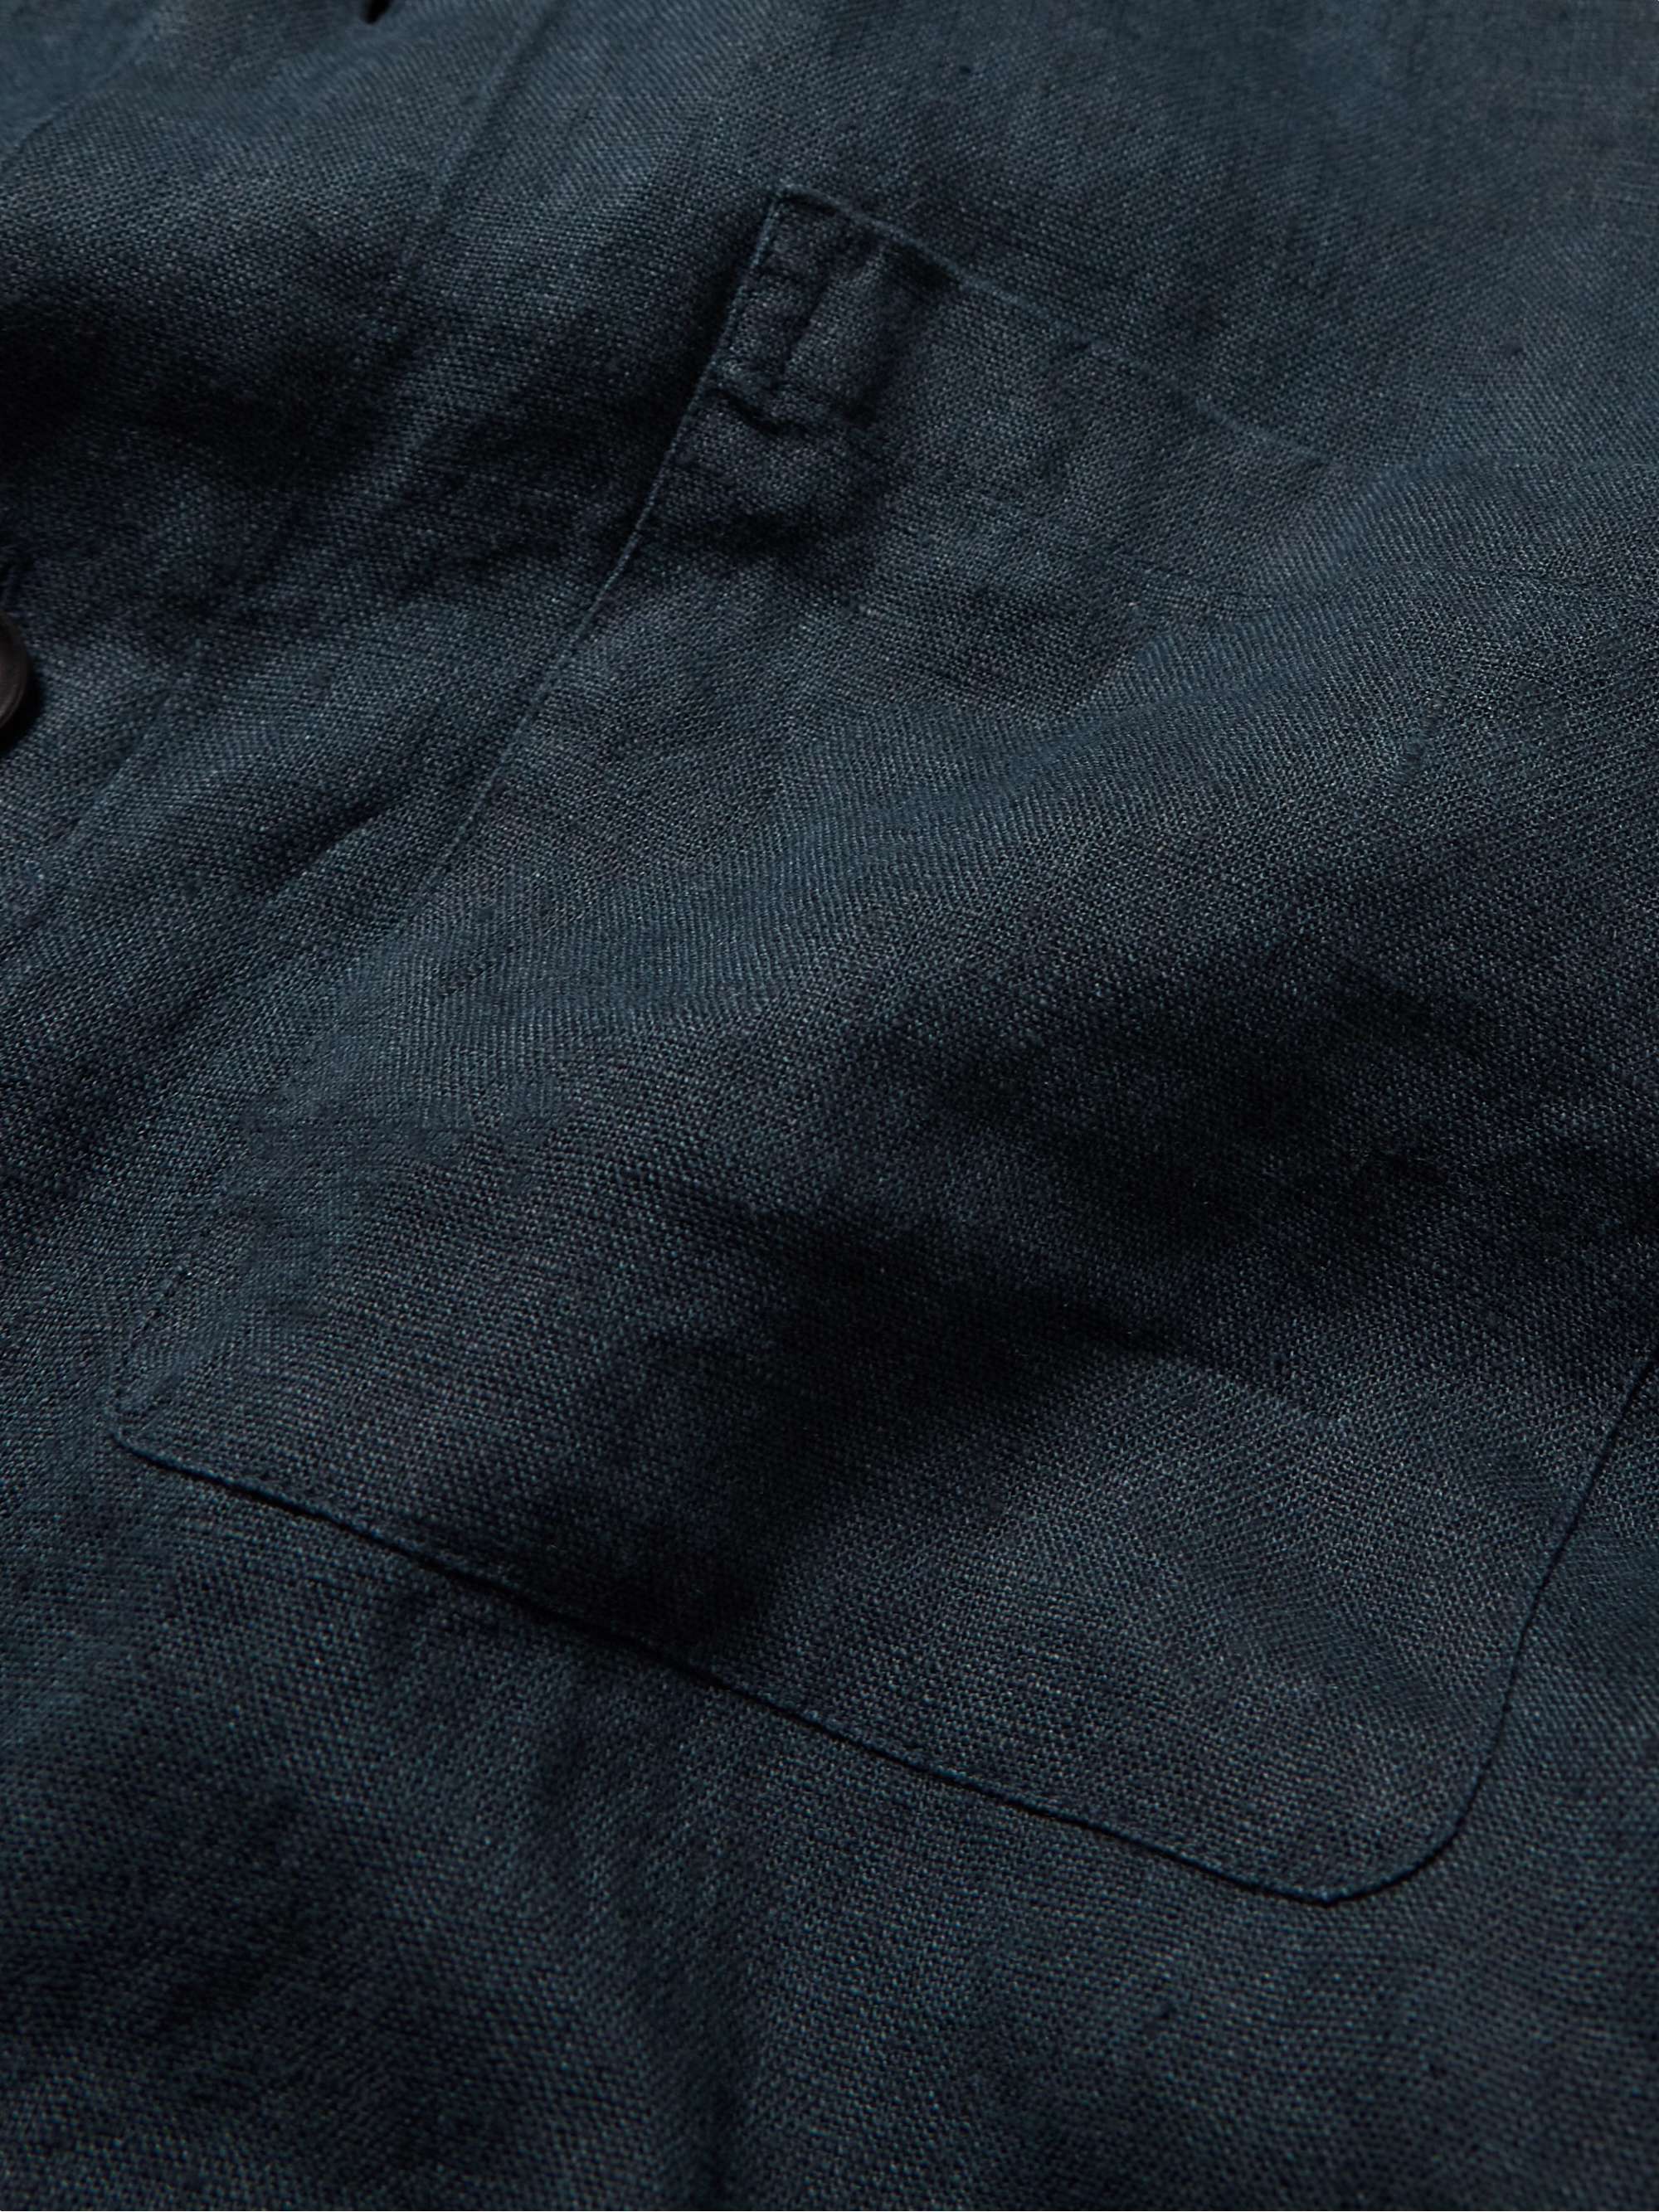 OLIVER SPENCER Milford Linen Blouson Jacket for Men | MR PORTER